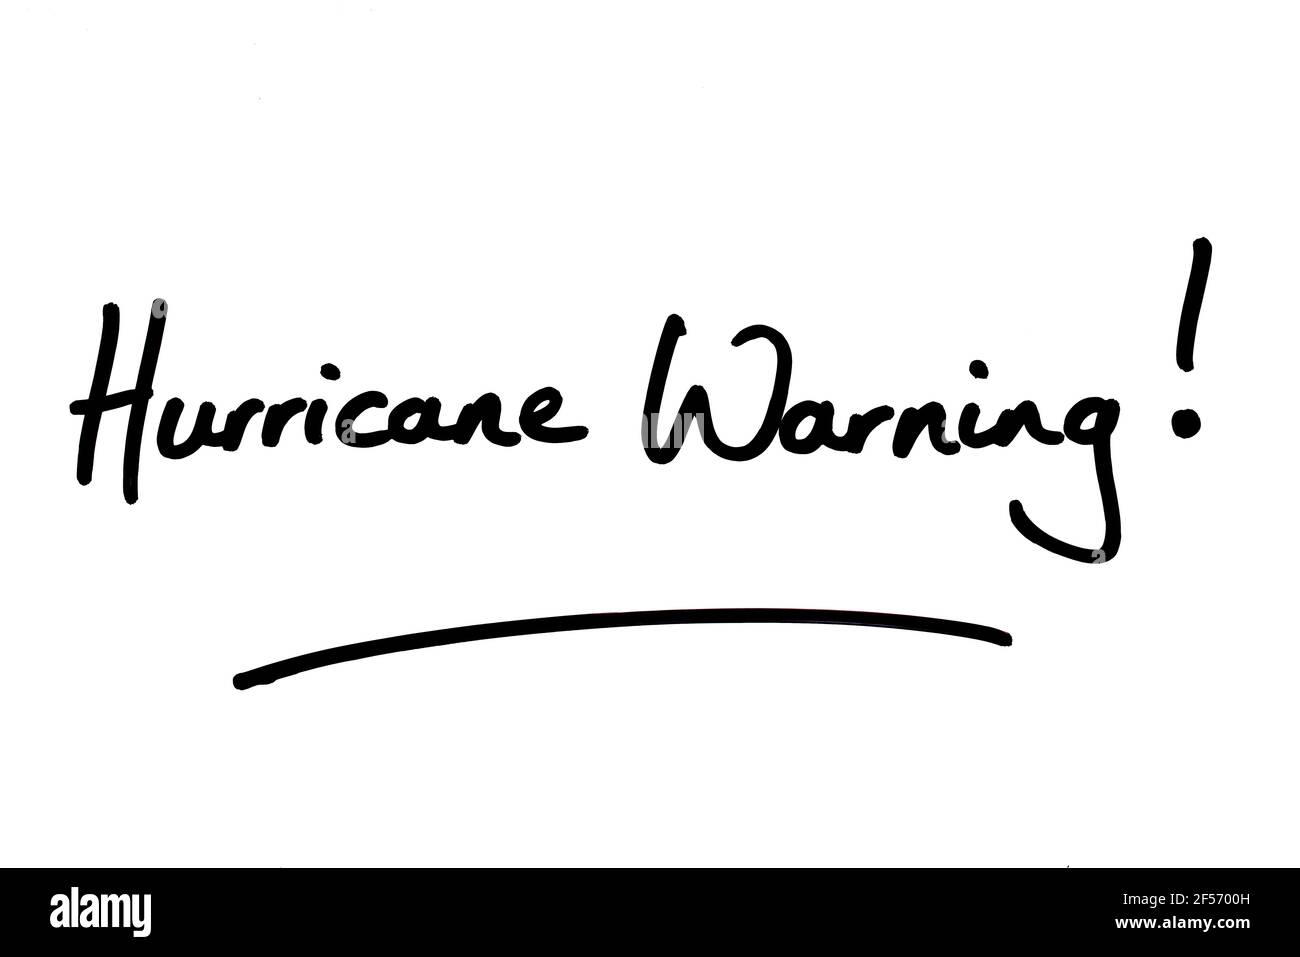 Hurricane Warning! handwritten on a white background. Stock Photo